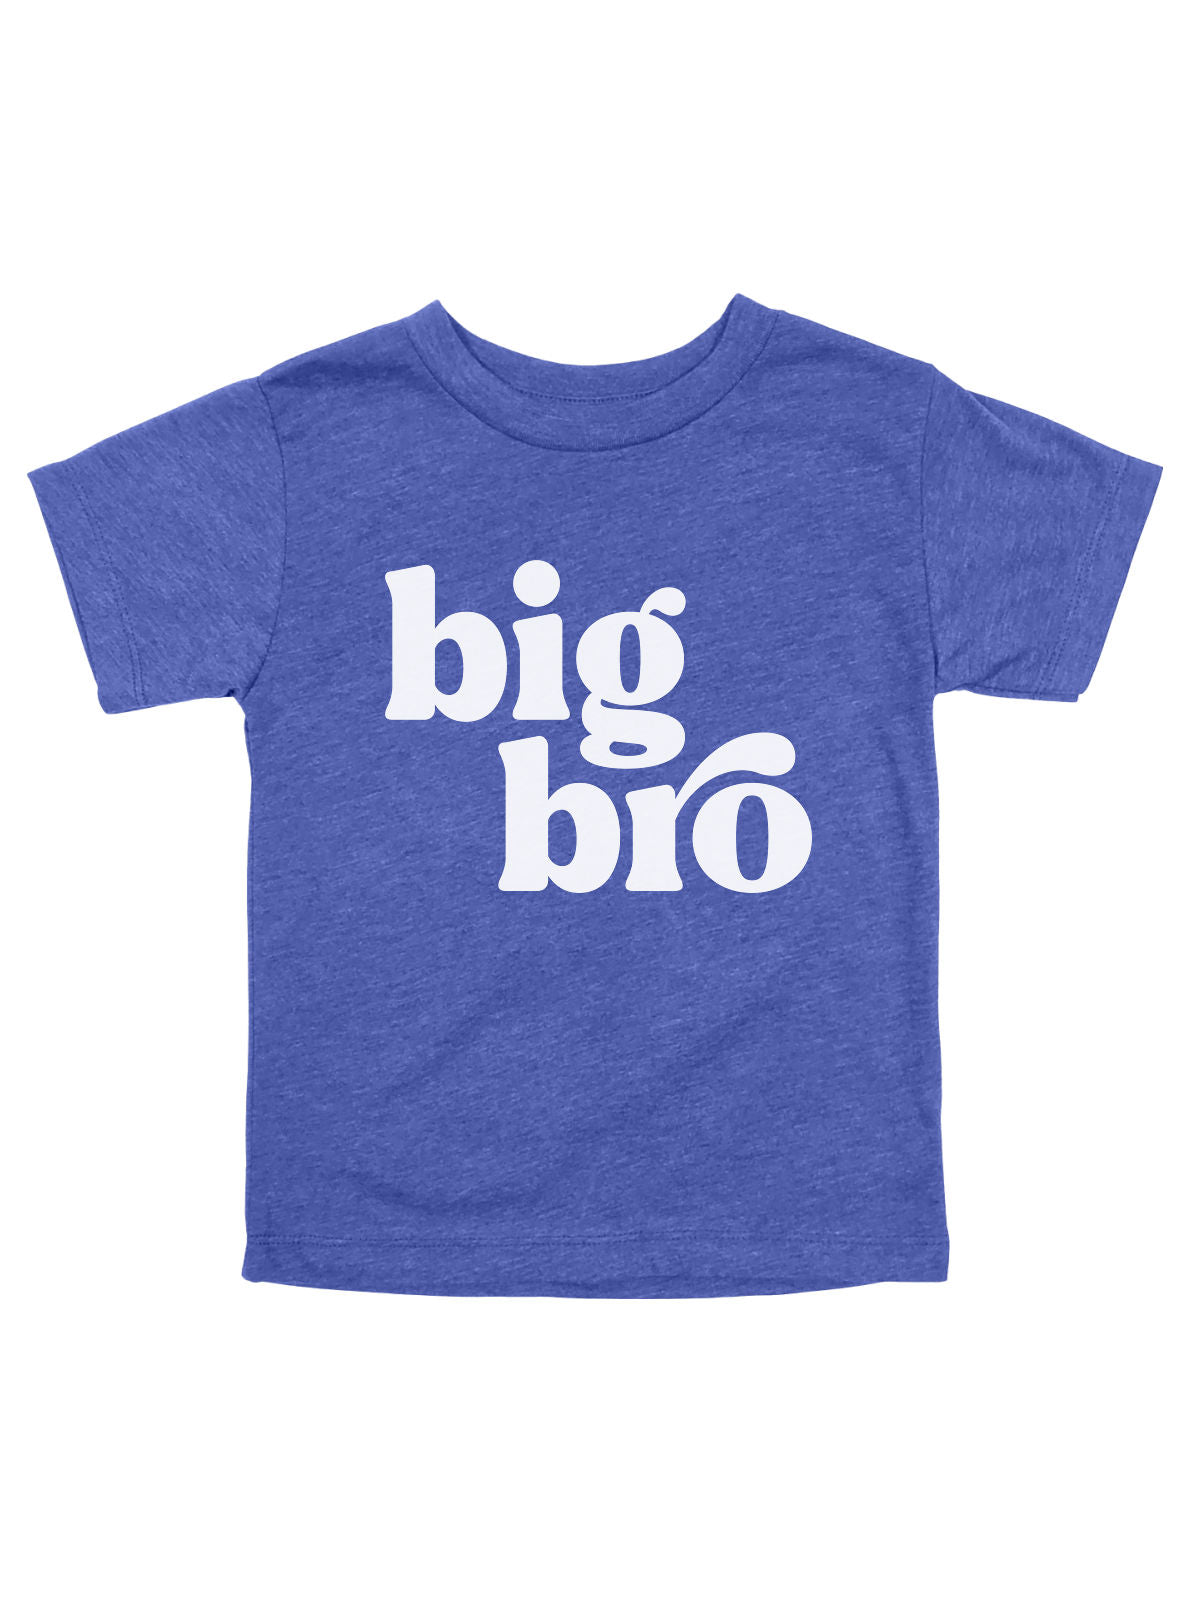 Big Bro Shirt for Boys in Royal Blue